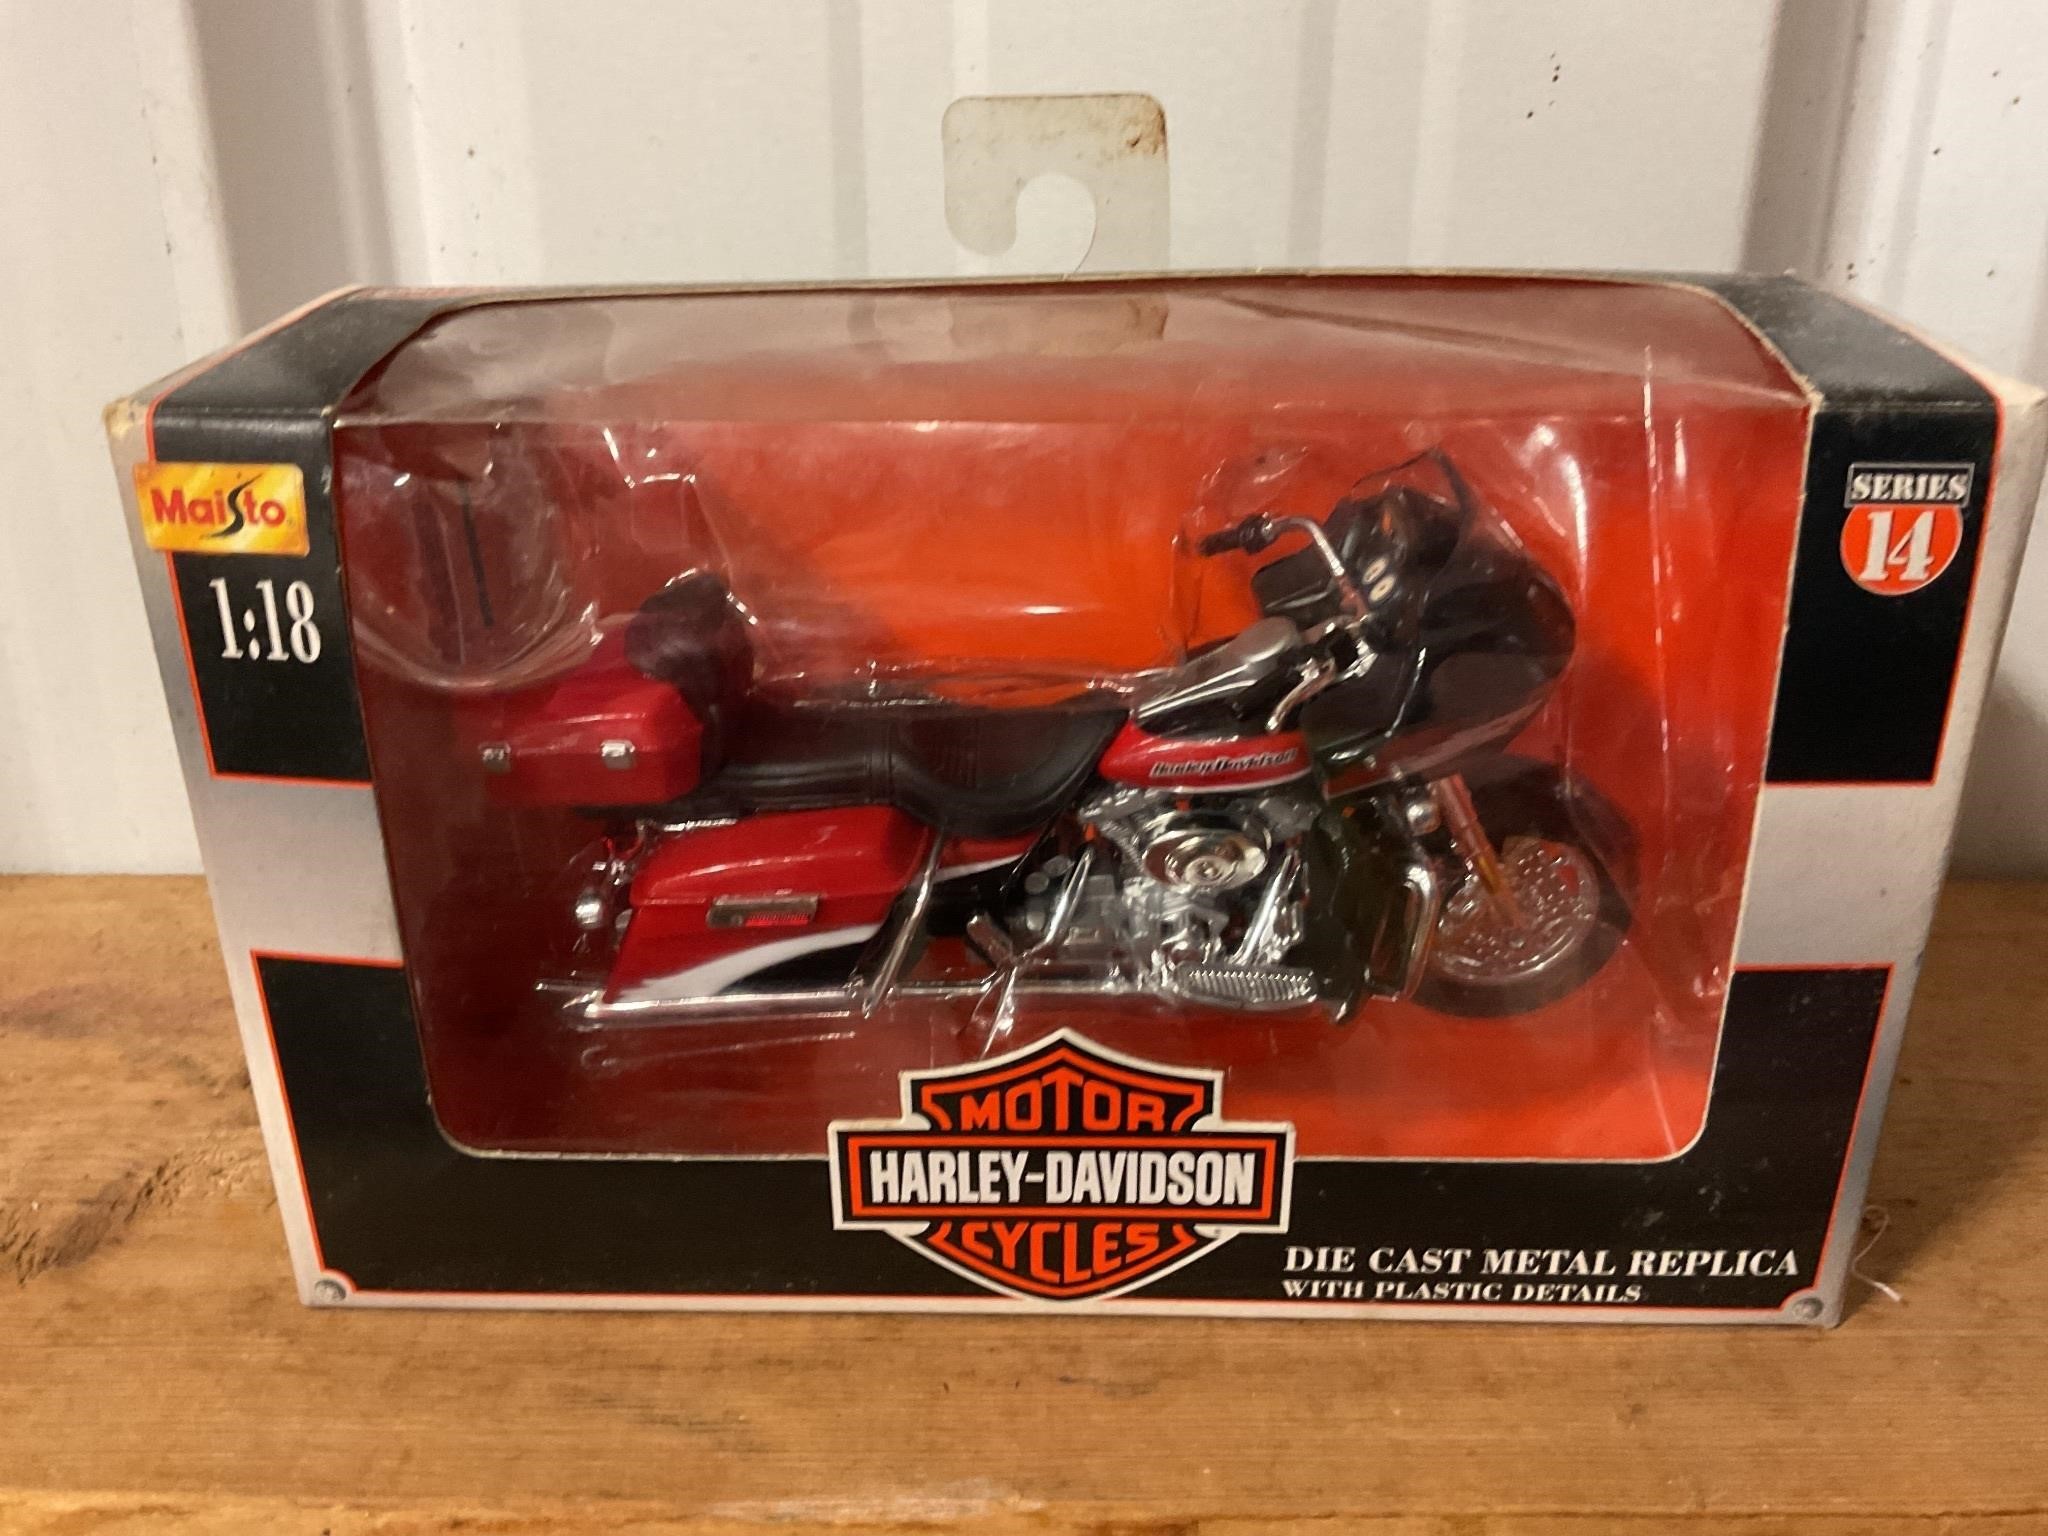 Medal Harley Davidson bike